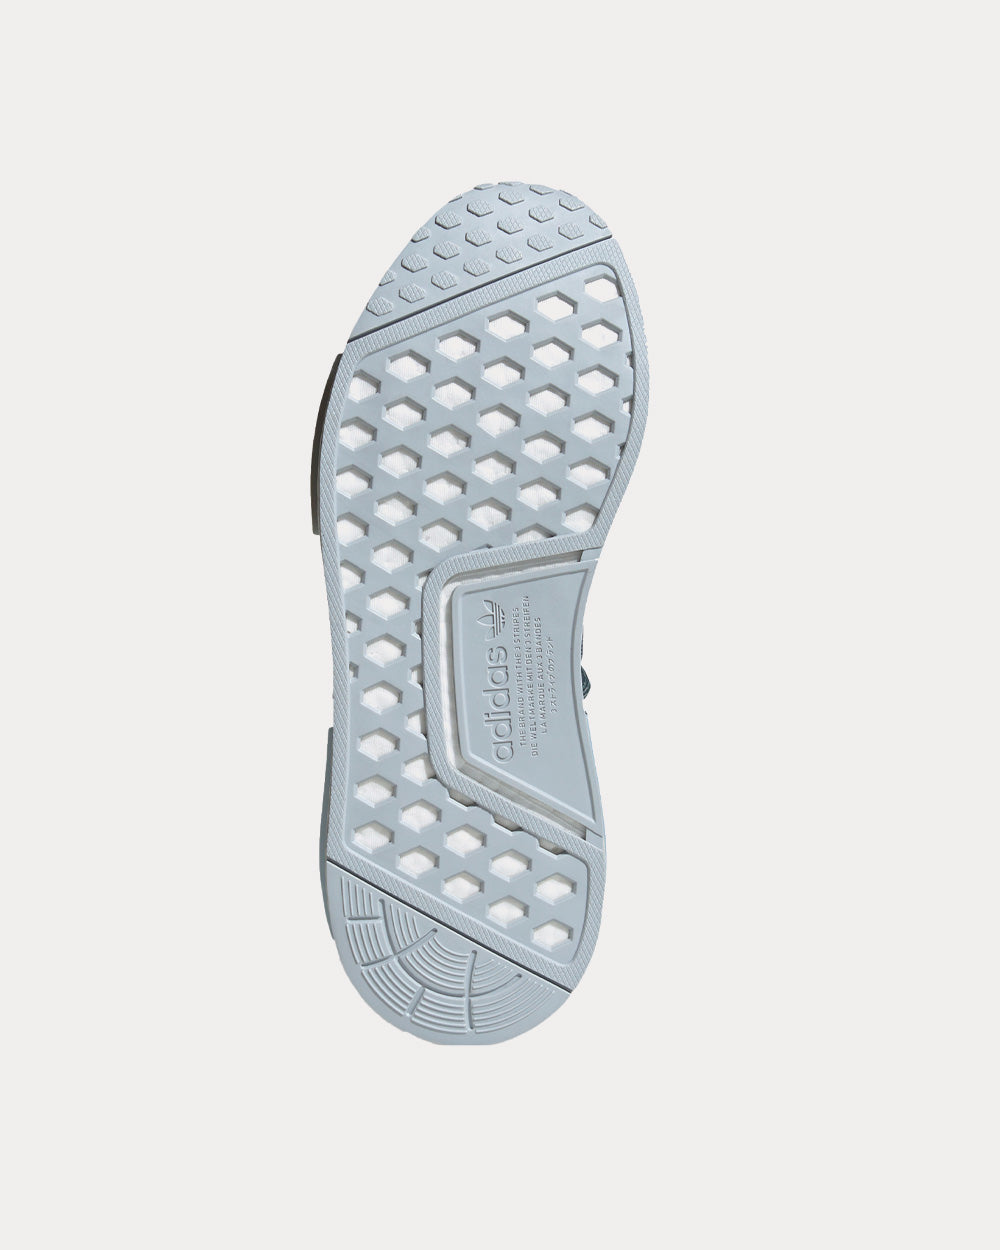 Adidas x Pharrell Williams - HU NMD Grey / Blue Low Top Sneakers